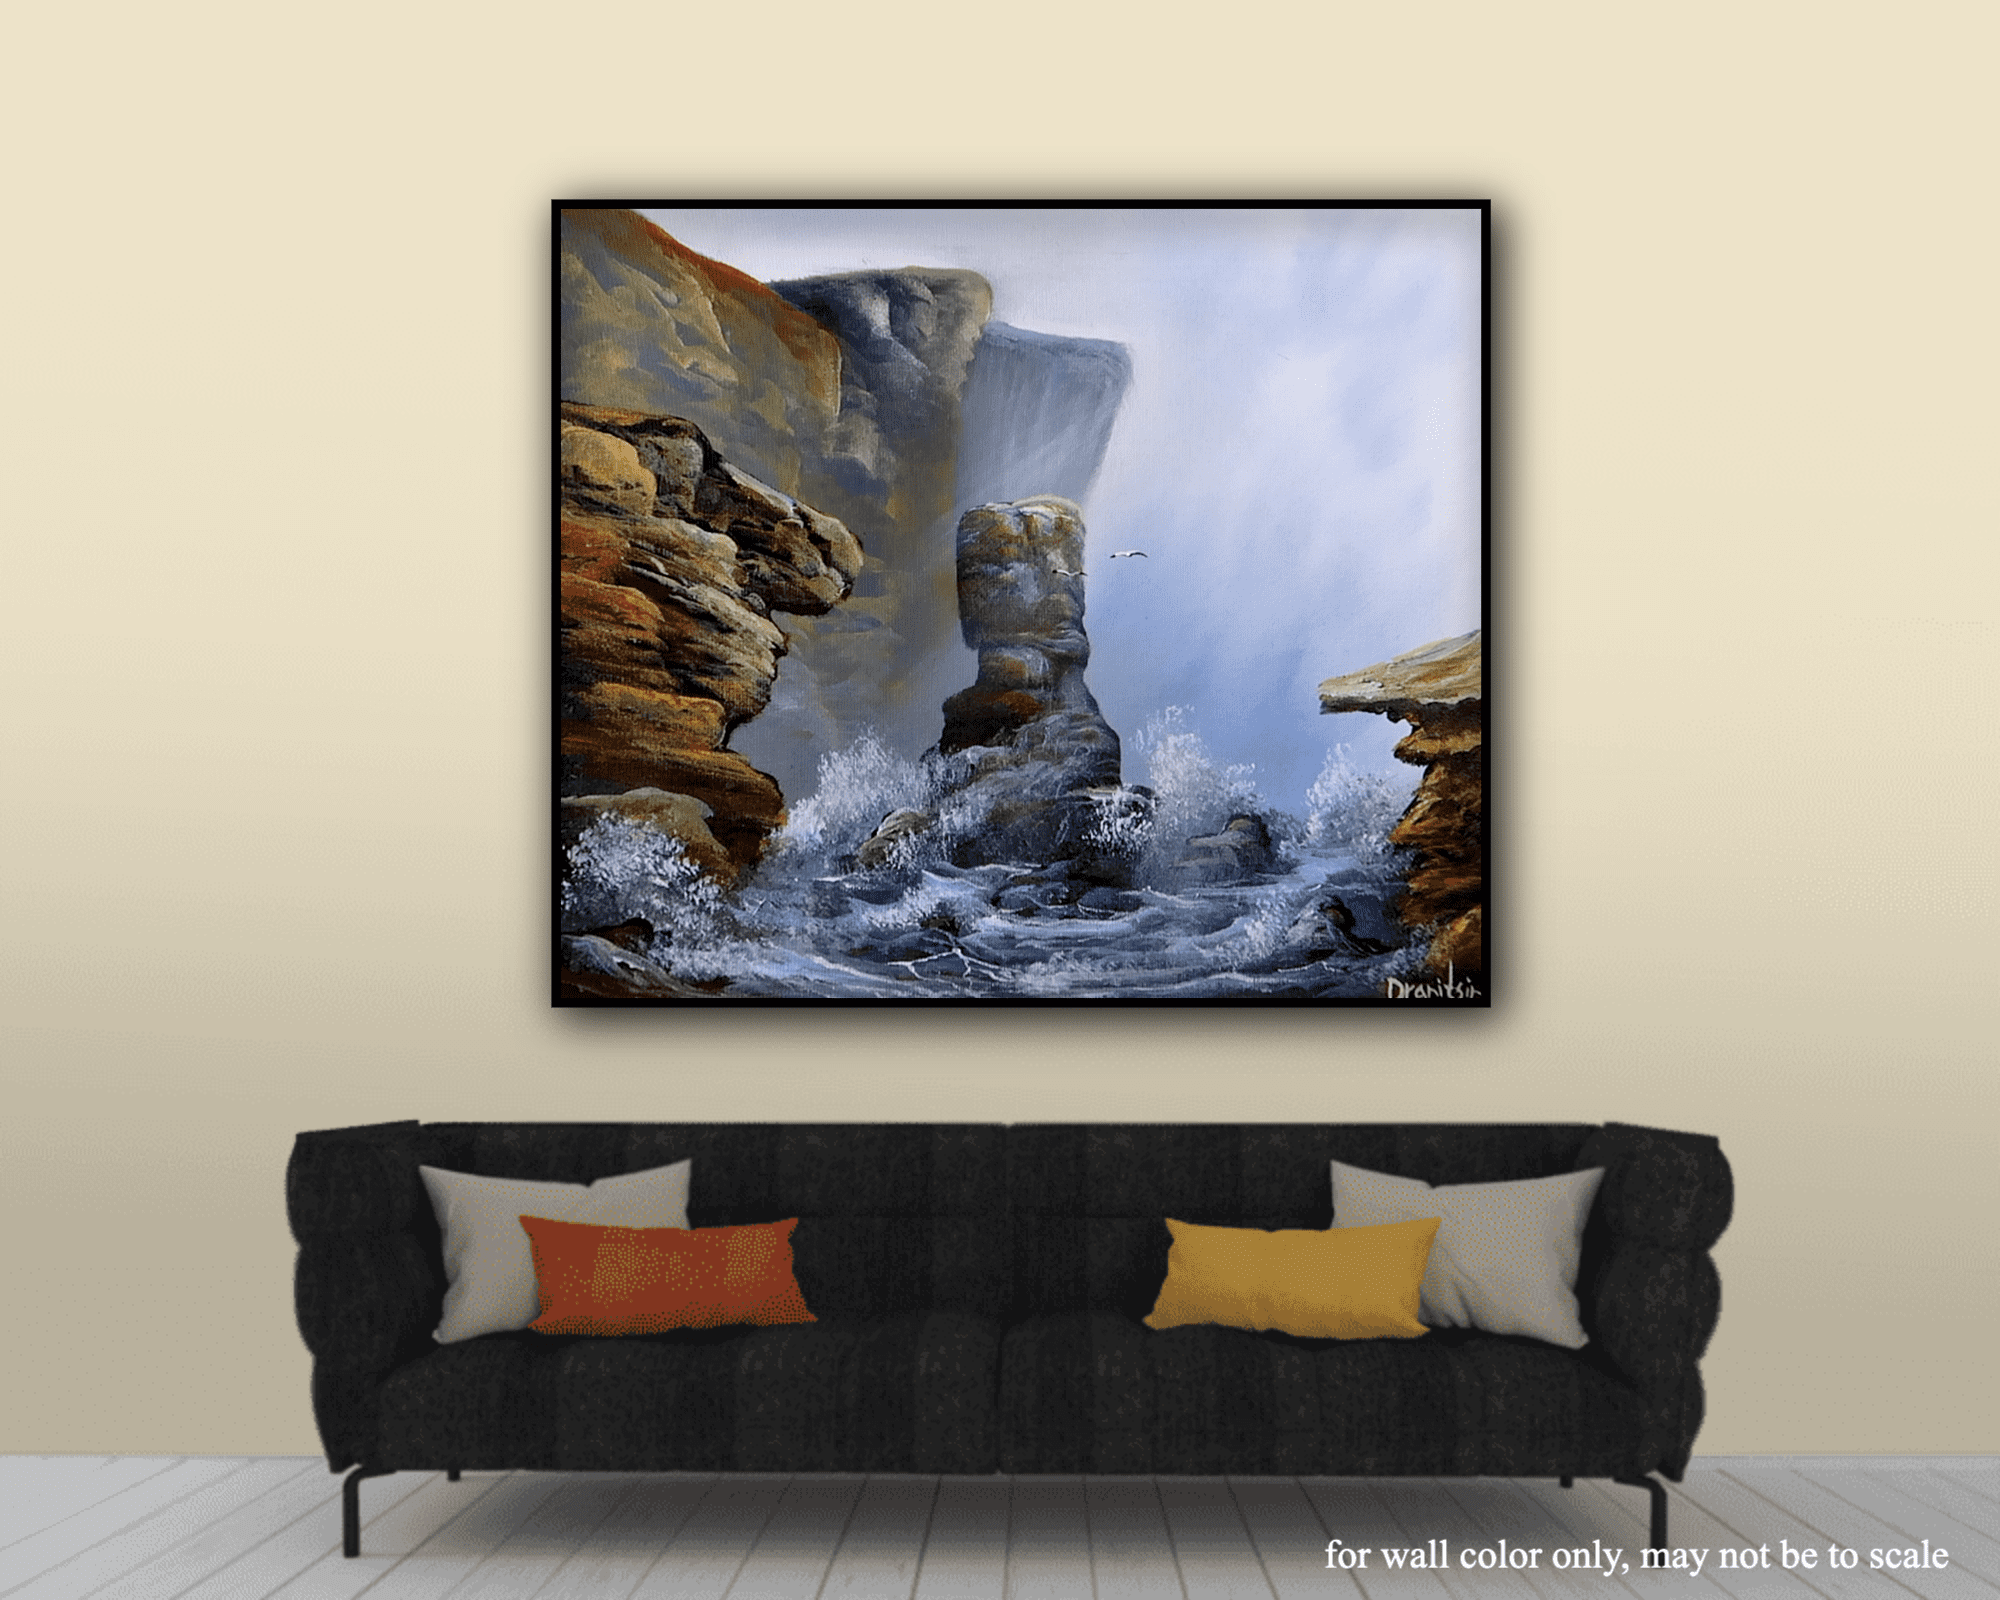 ocean rock formations acrylic landscape painting by urartstudio.com 2